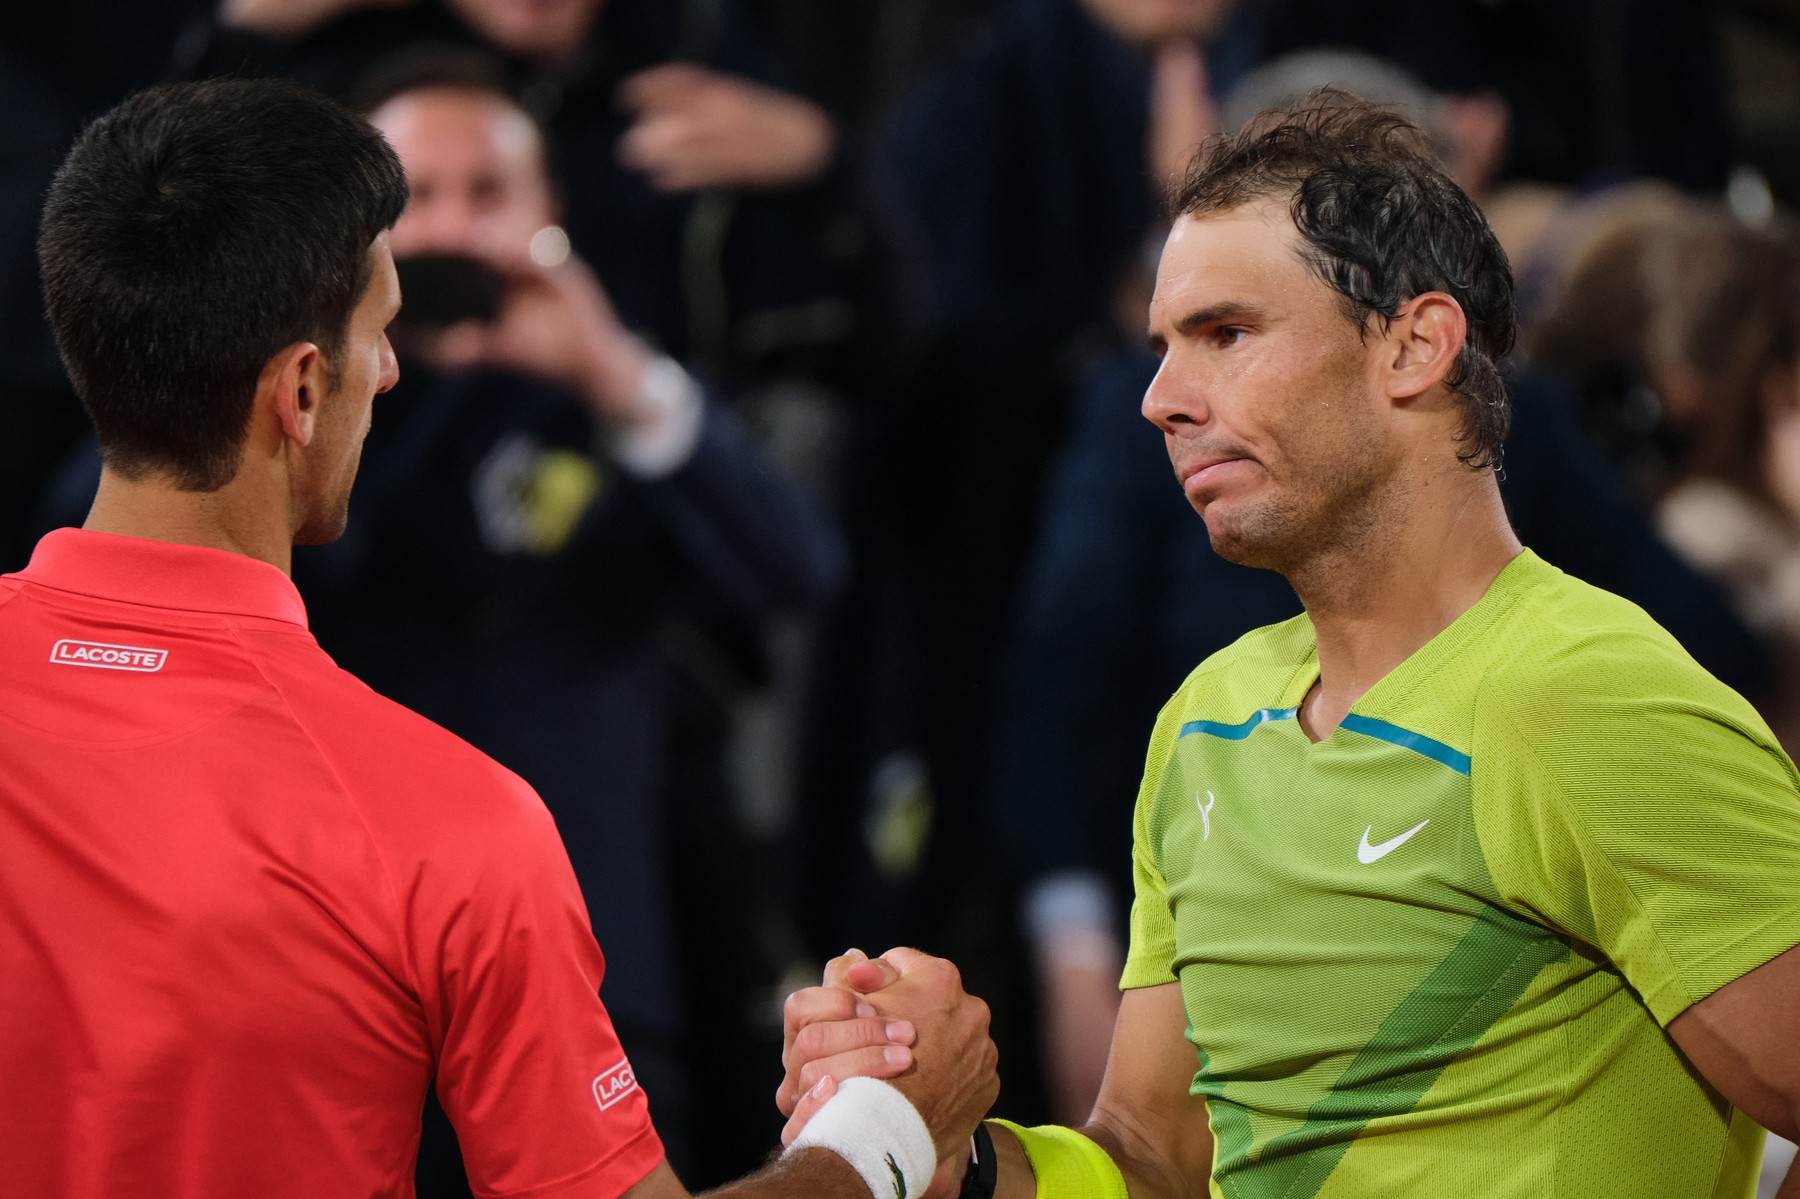  Rafael Nadal priznao da ne moze prestici Djokovica u grend slem titulama 